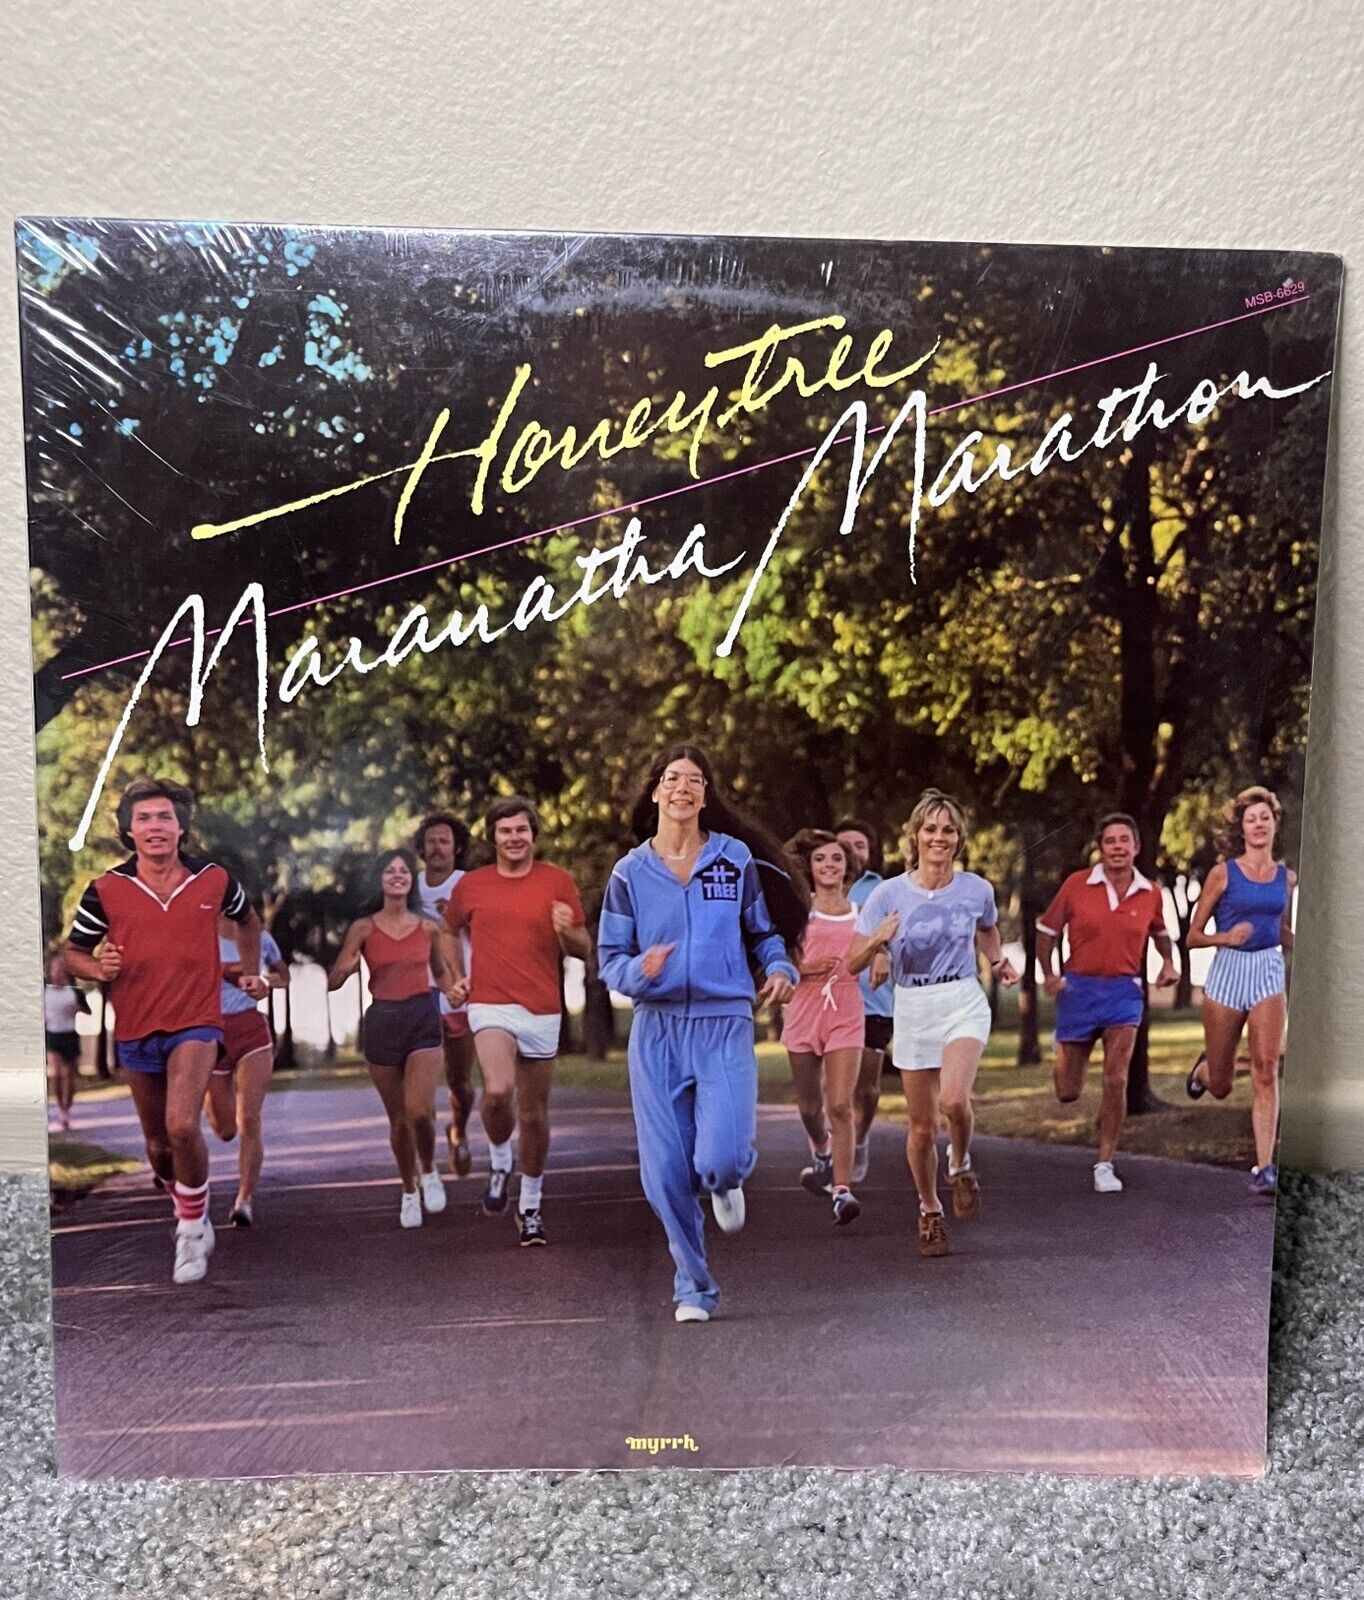 HONEYTREE Maranatha Marathon VINYL LP MSB-6629 Myrrh 1979 Nancy BRAND NEW SEALED